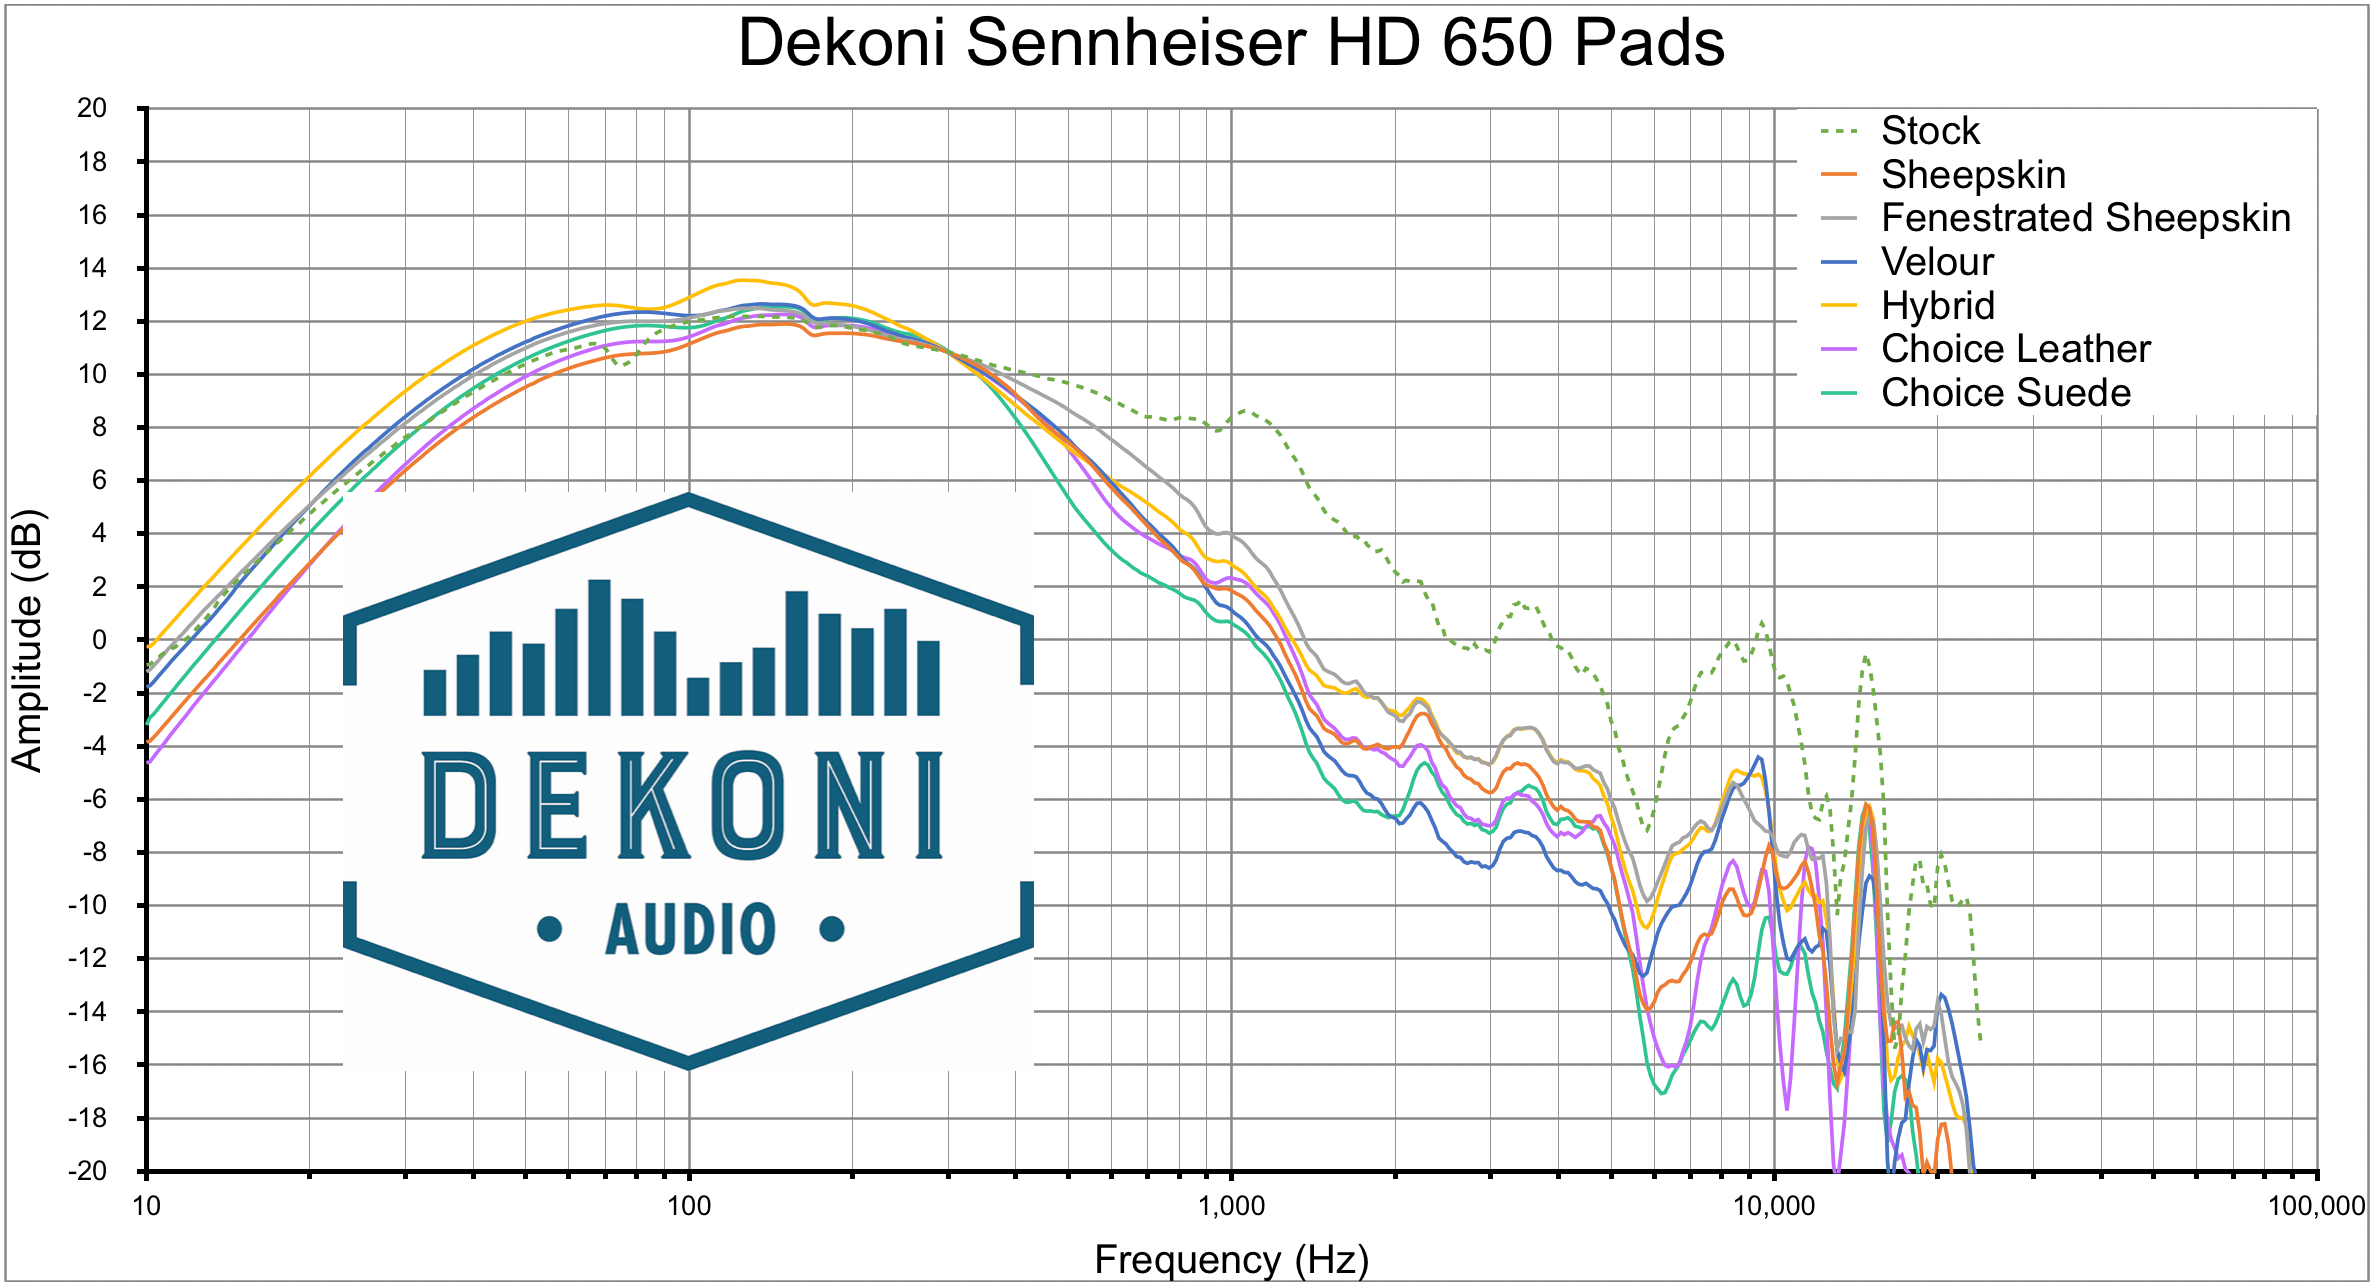 Dekoni HD 650 Pads Compared